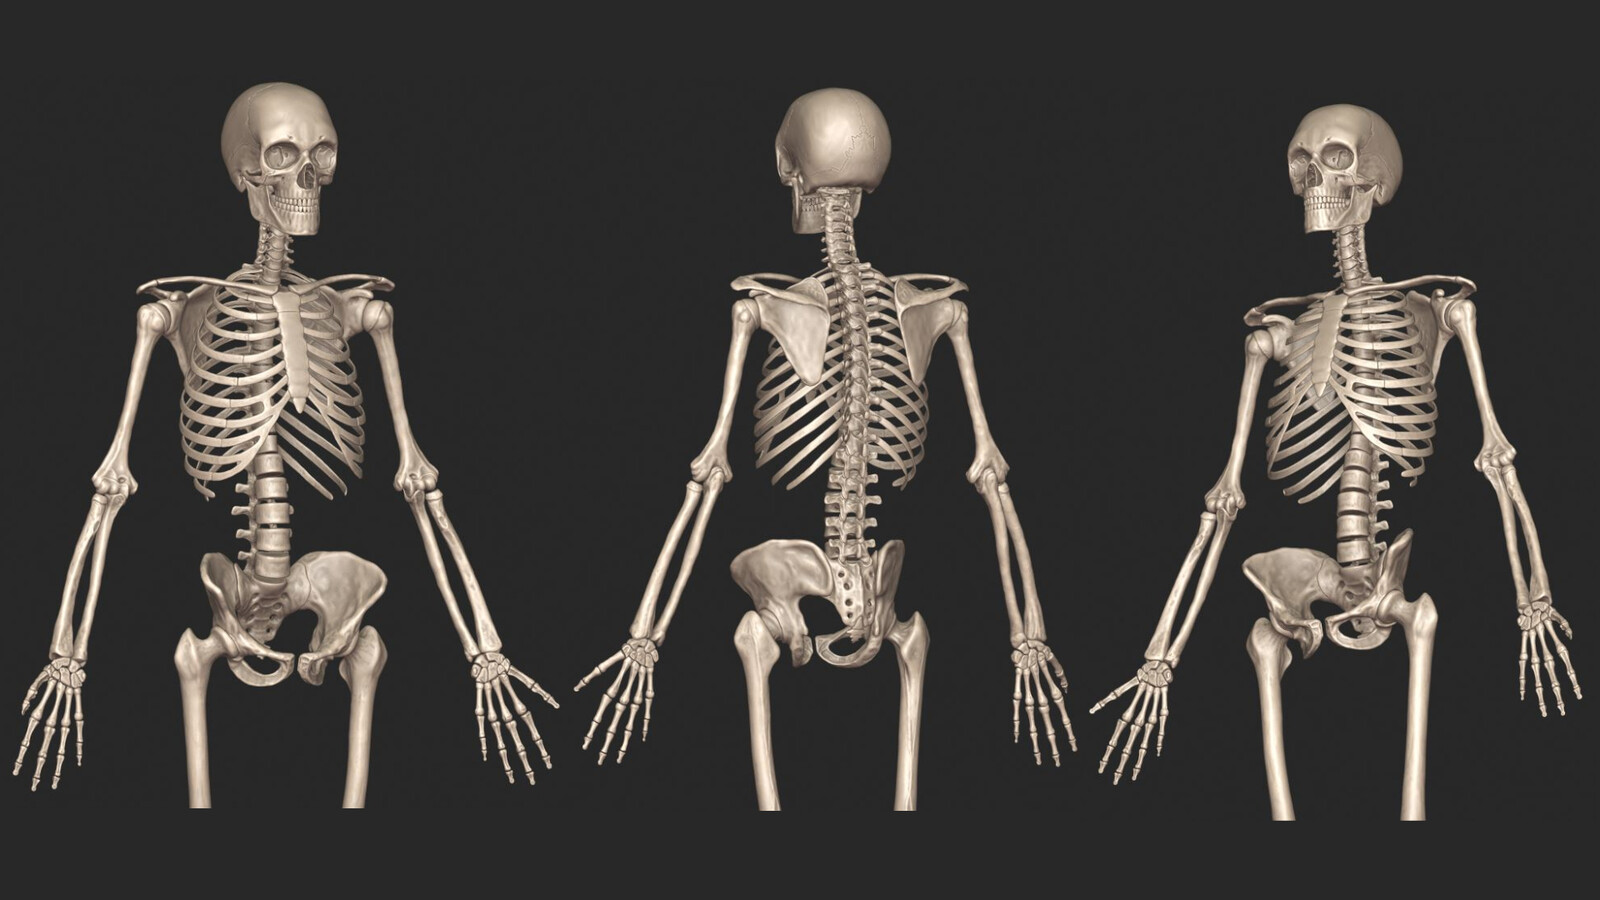 Palkansh Khandelwal - 3D Human Skeletal System